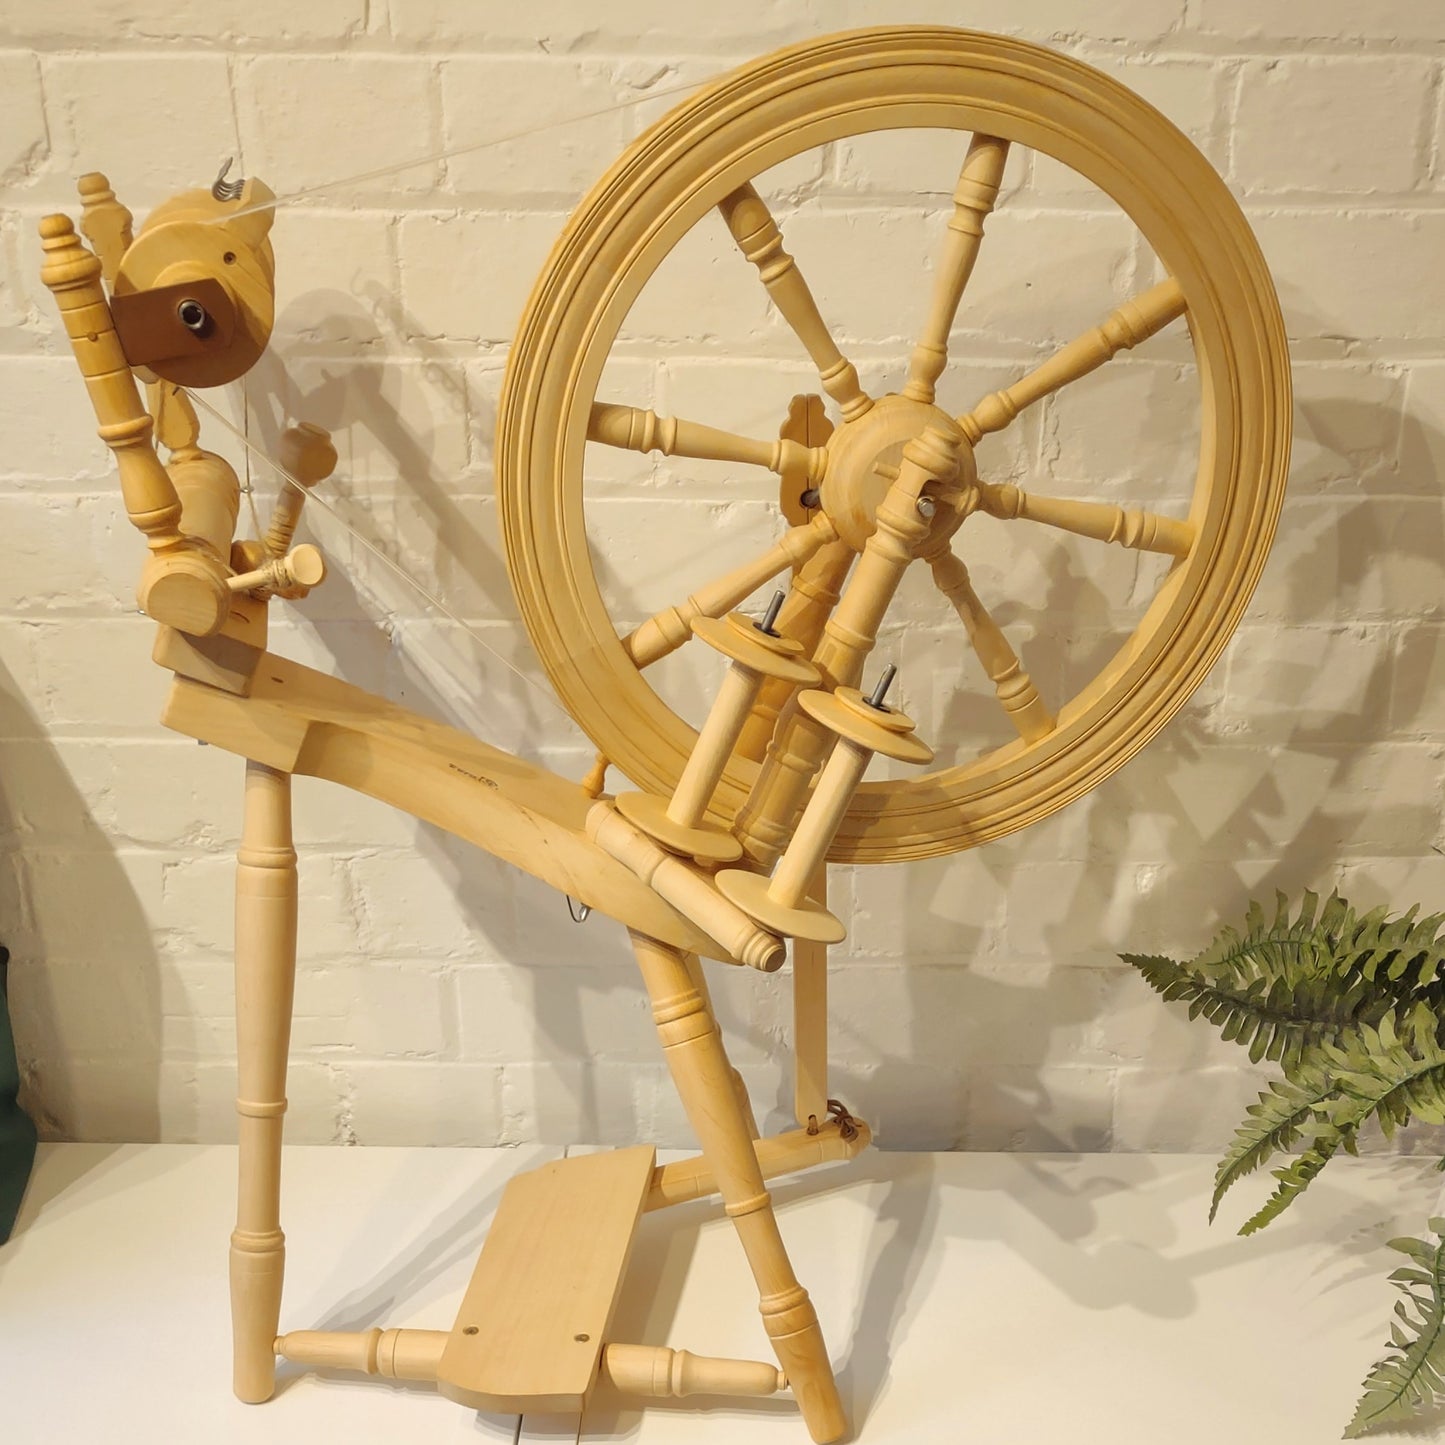 PRELUDE spinning wheel